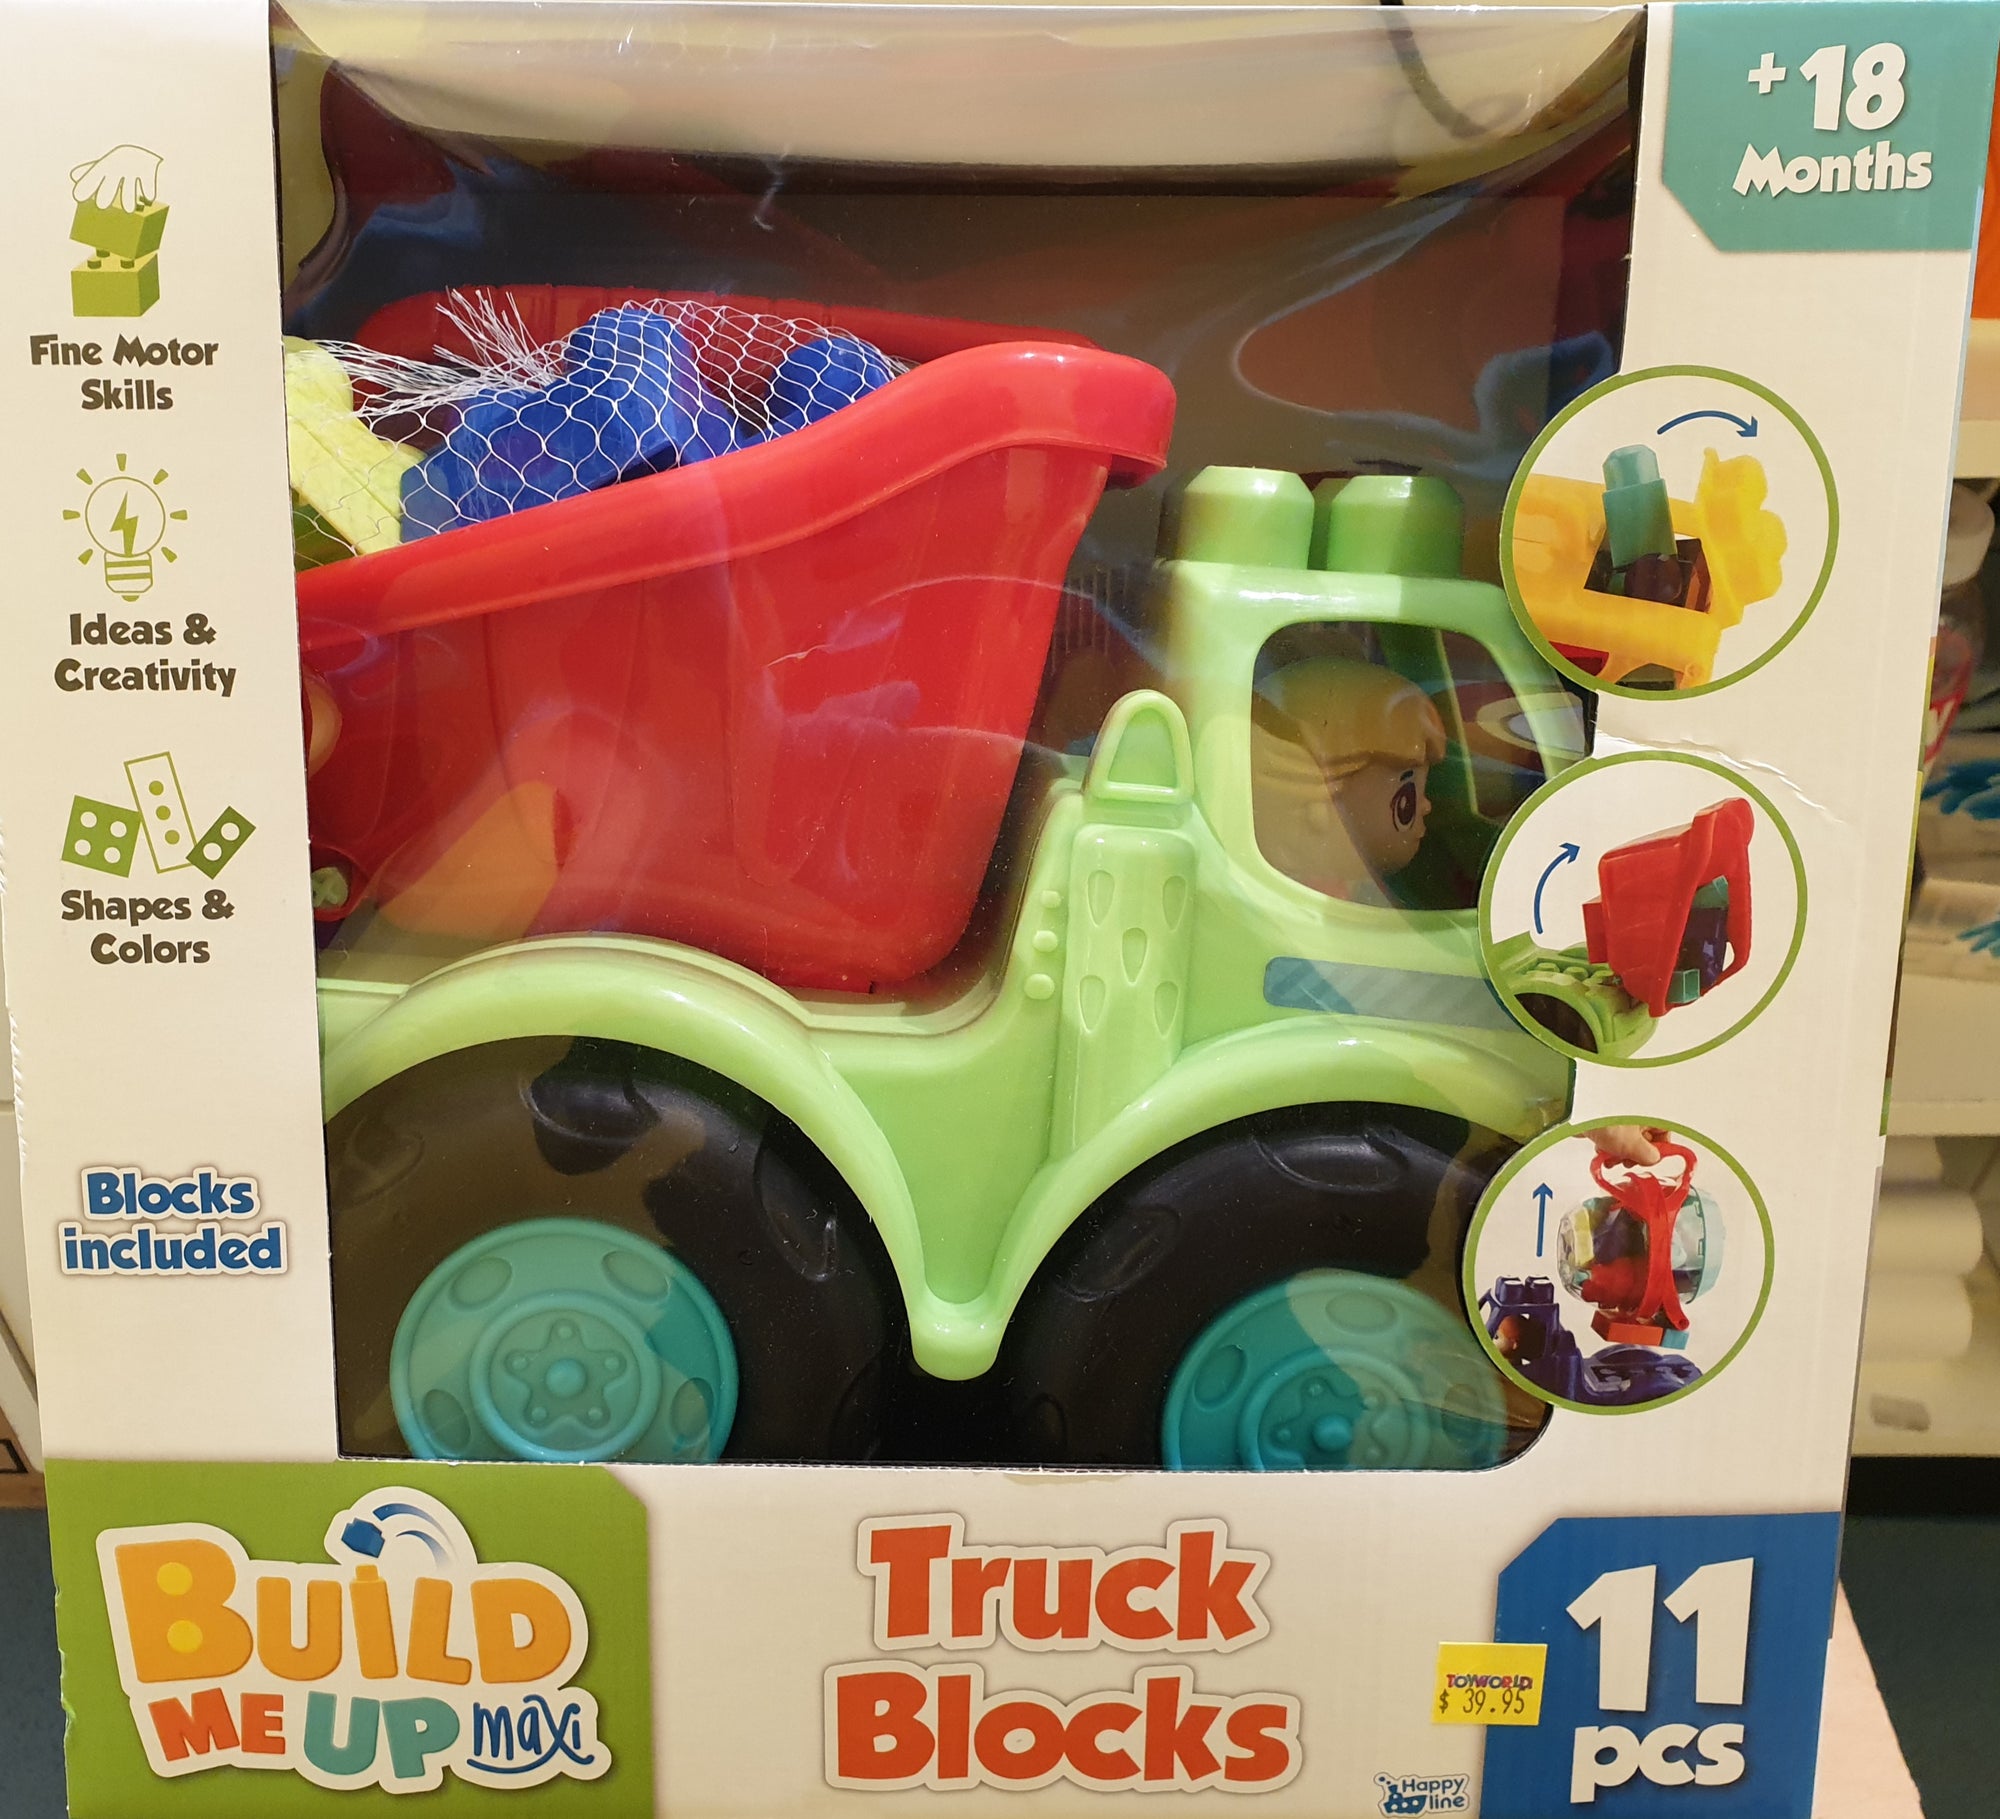 BUILD ME UP TRUCK BLOCKS 11PCS | Toyworld Frankston | Toyworld Frankston